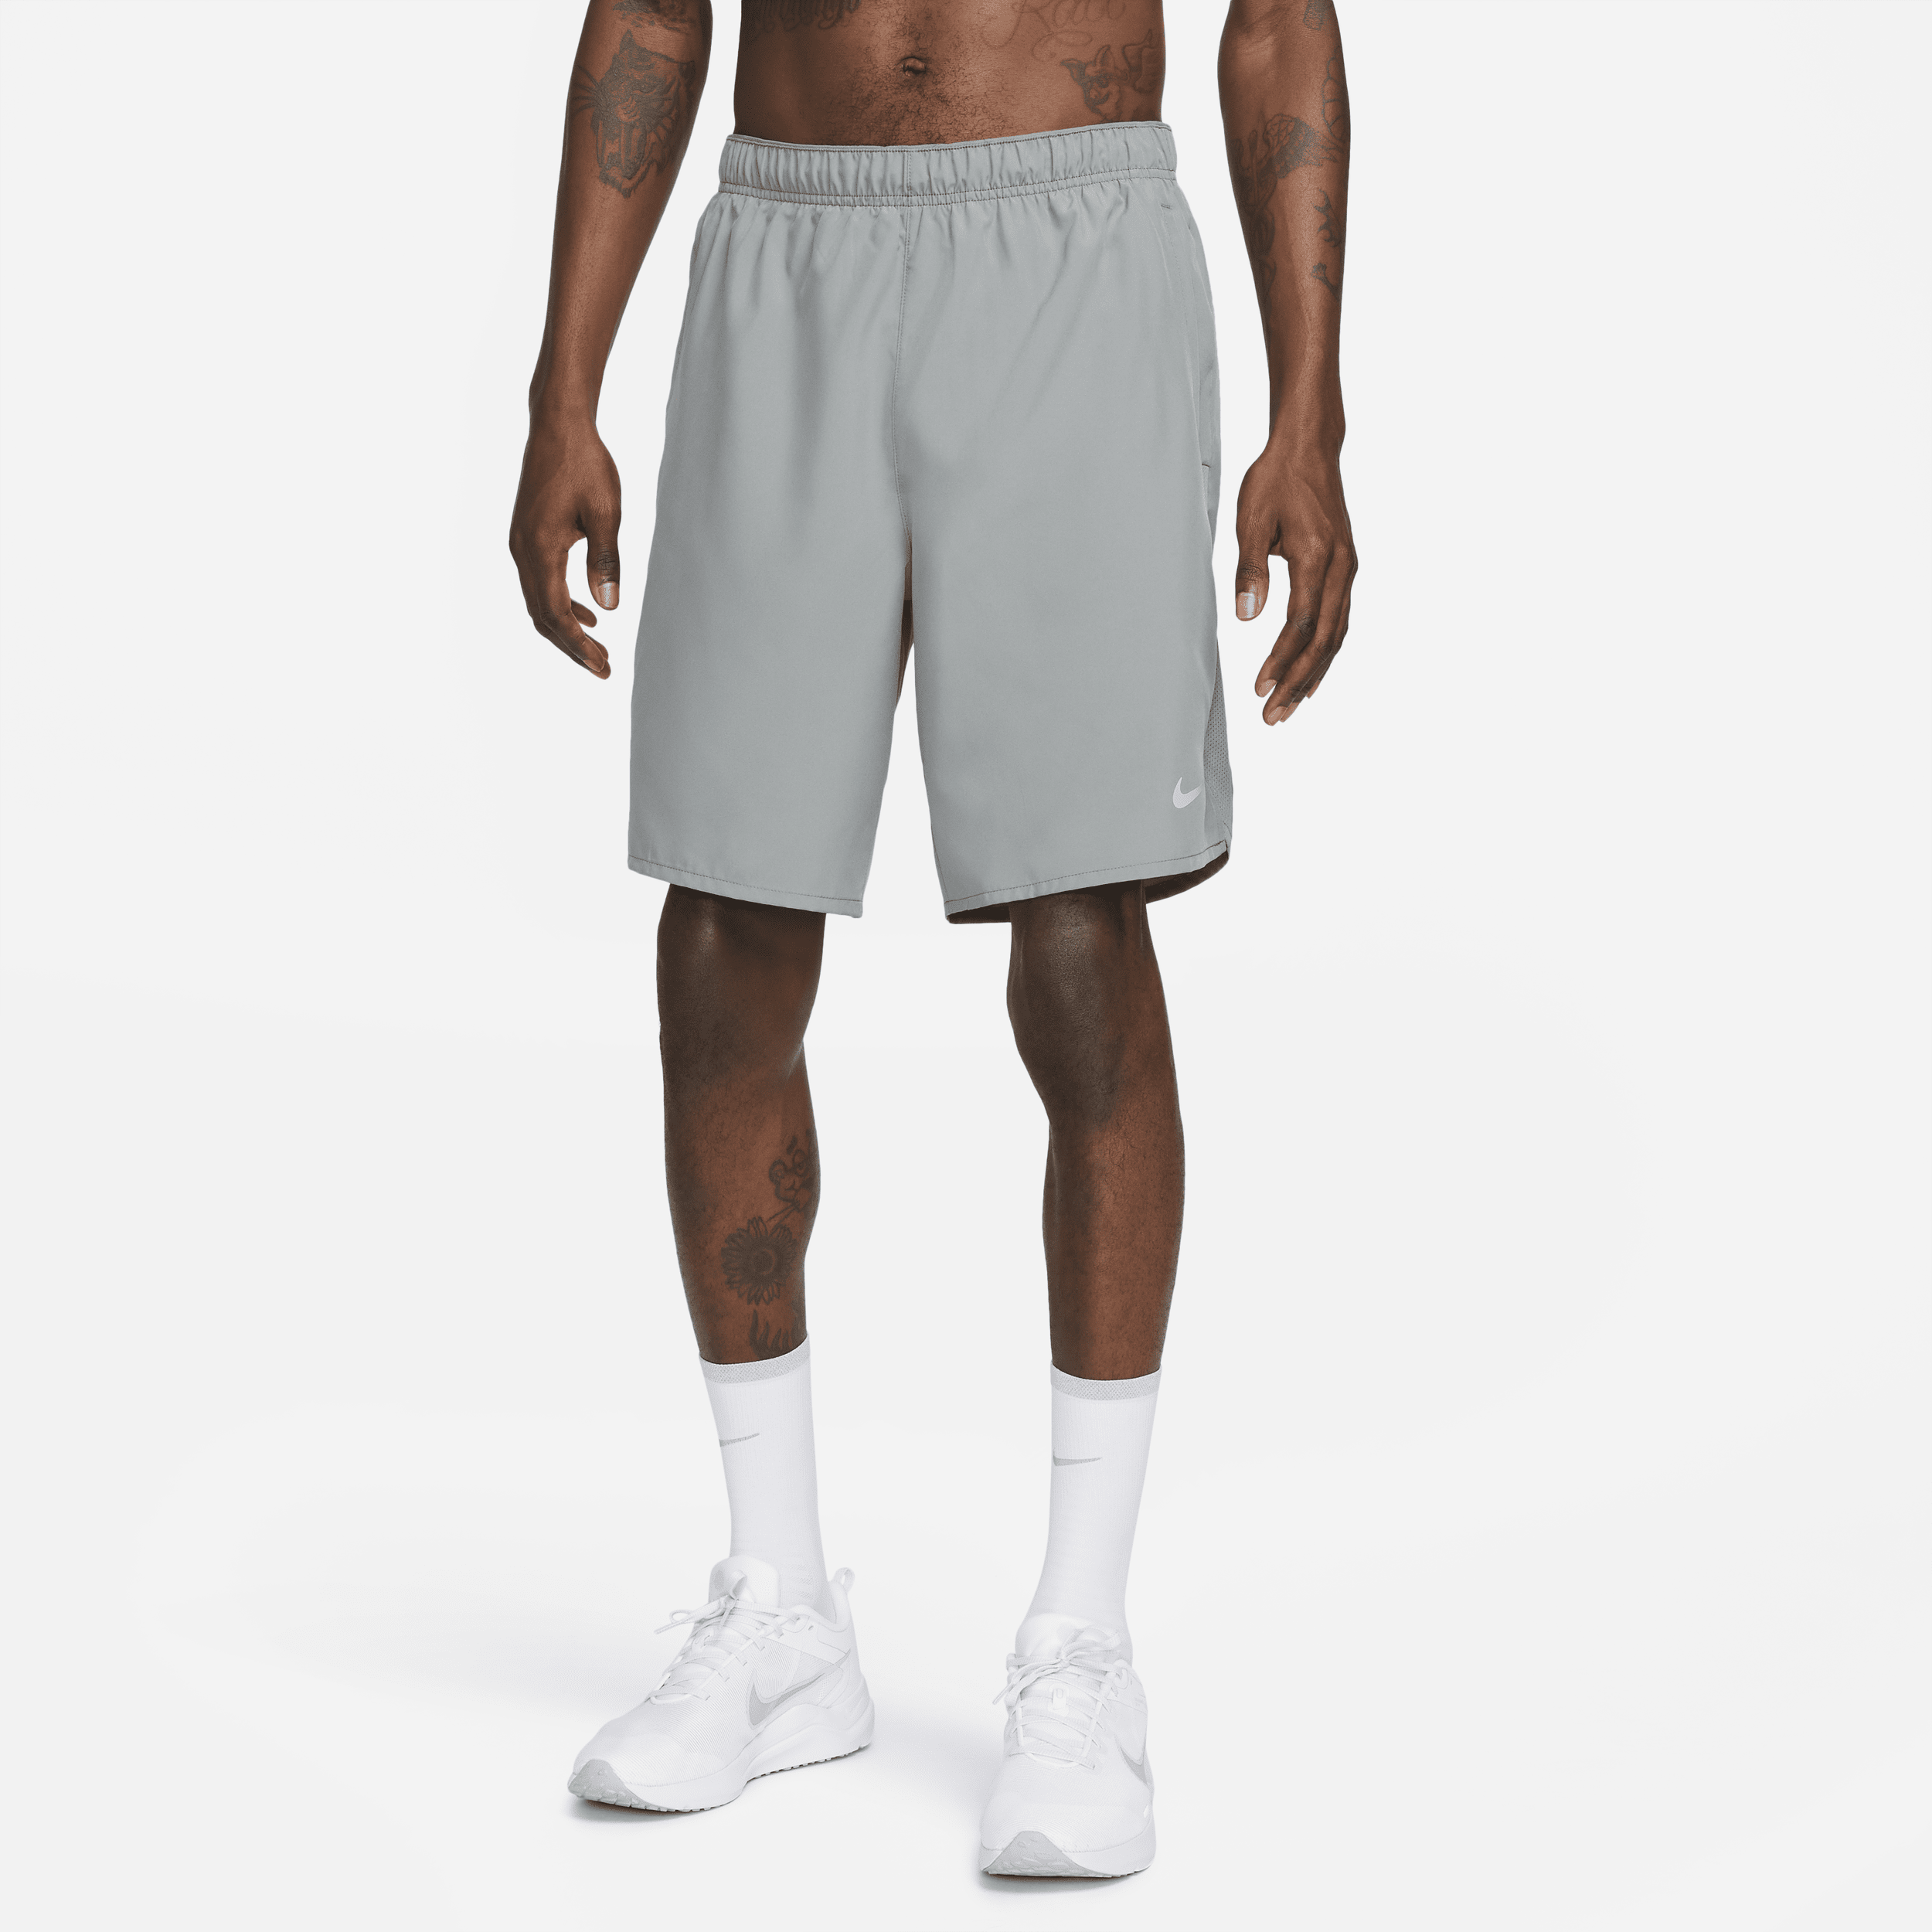 Nike Challenger Pantalón corto Dri-FIT versátil de 23 cm sin forro - Hombre - Gris